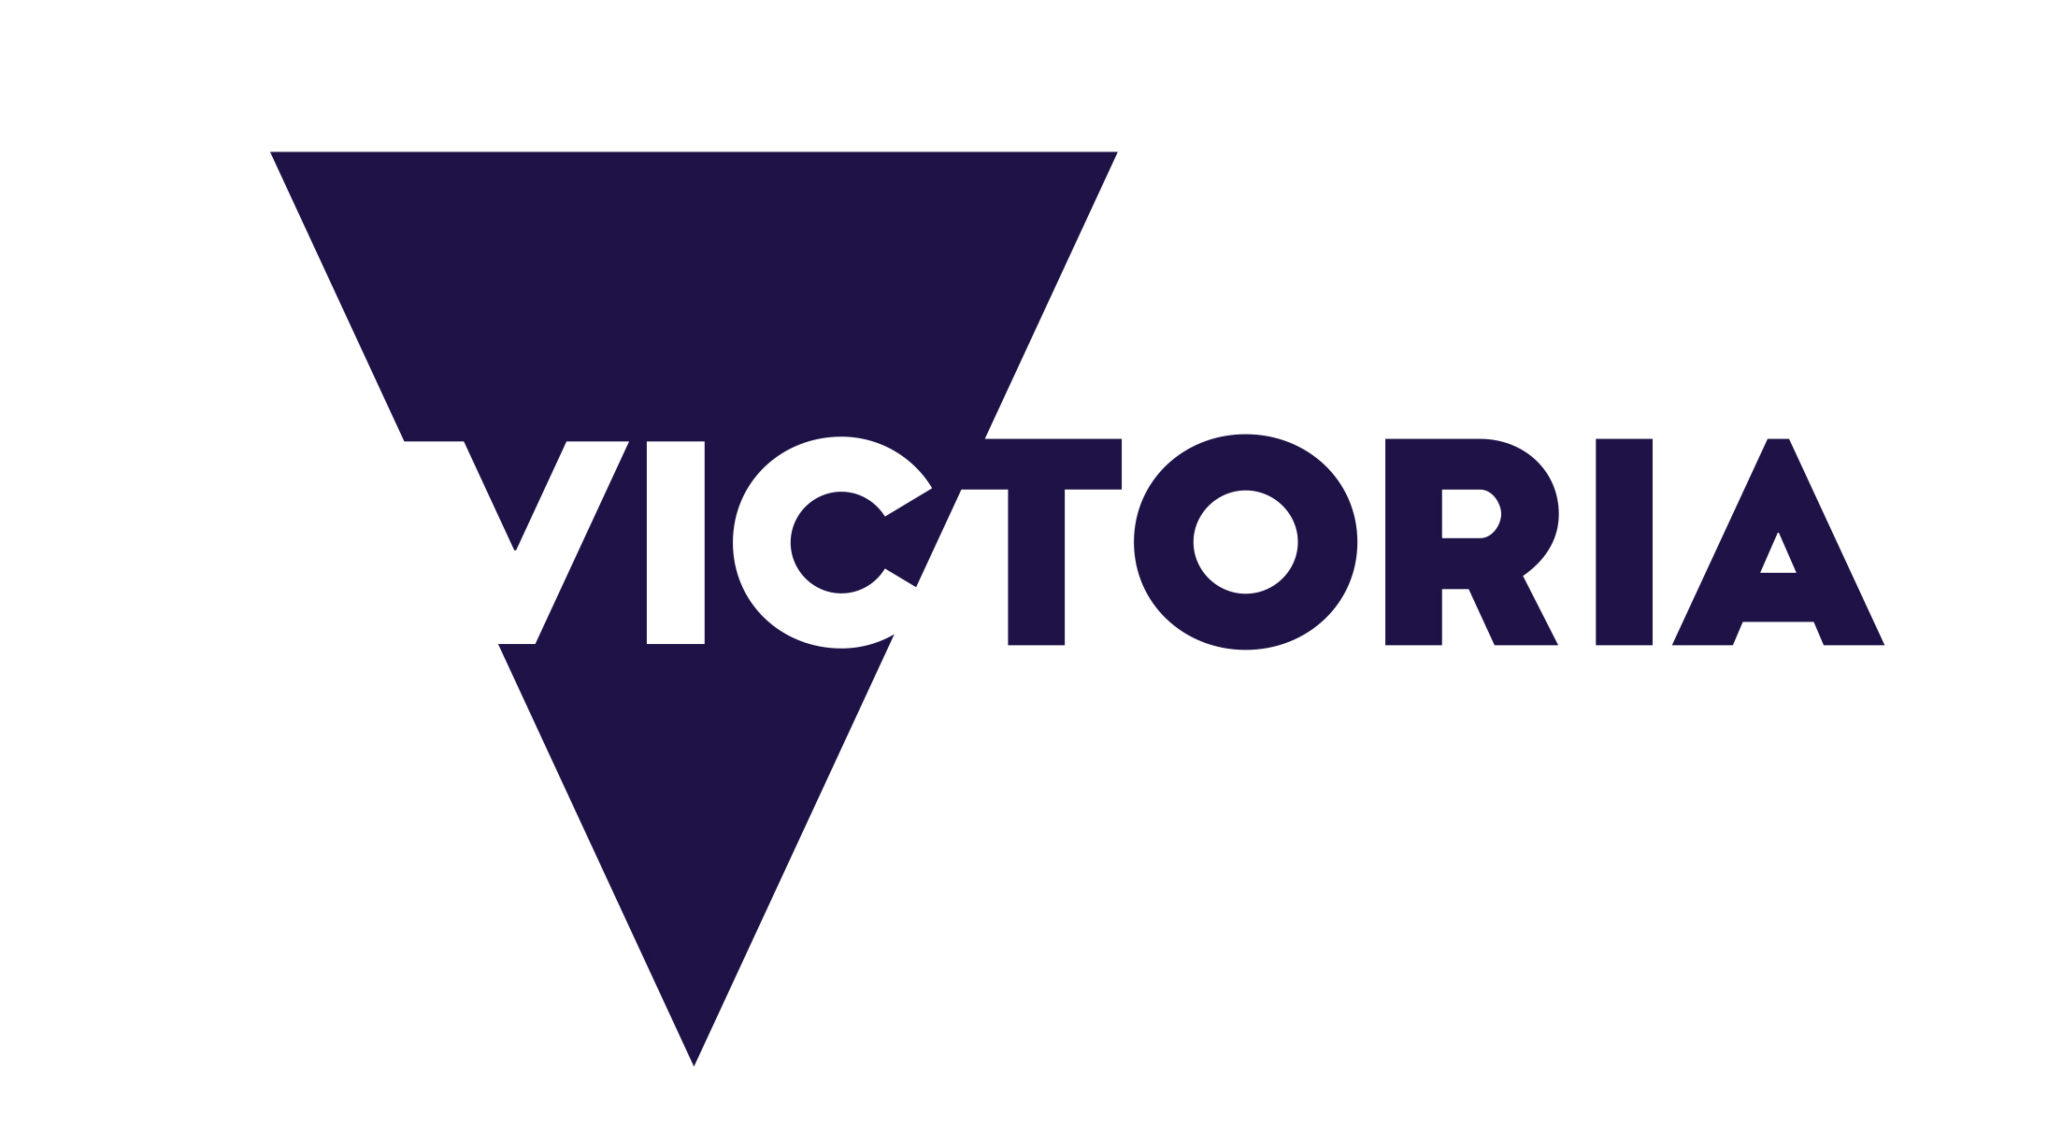 Brand-Victoria-Logo-pms-2765-cmyk